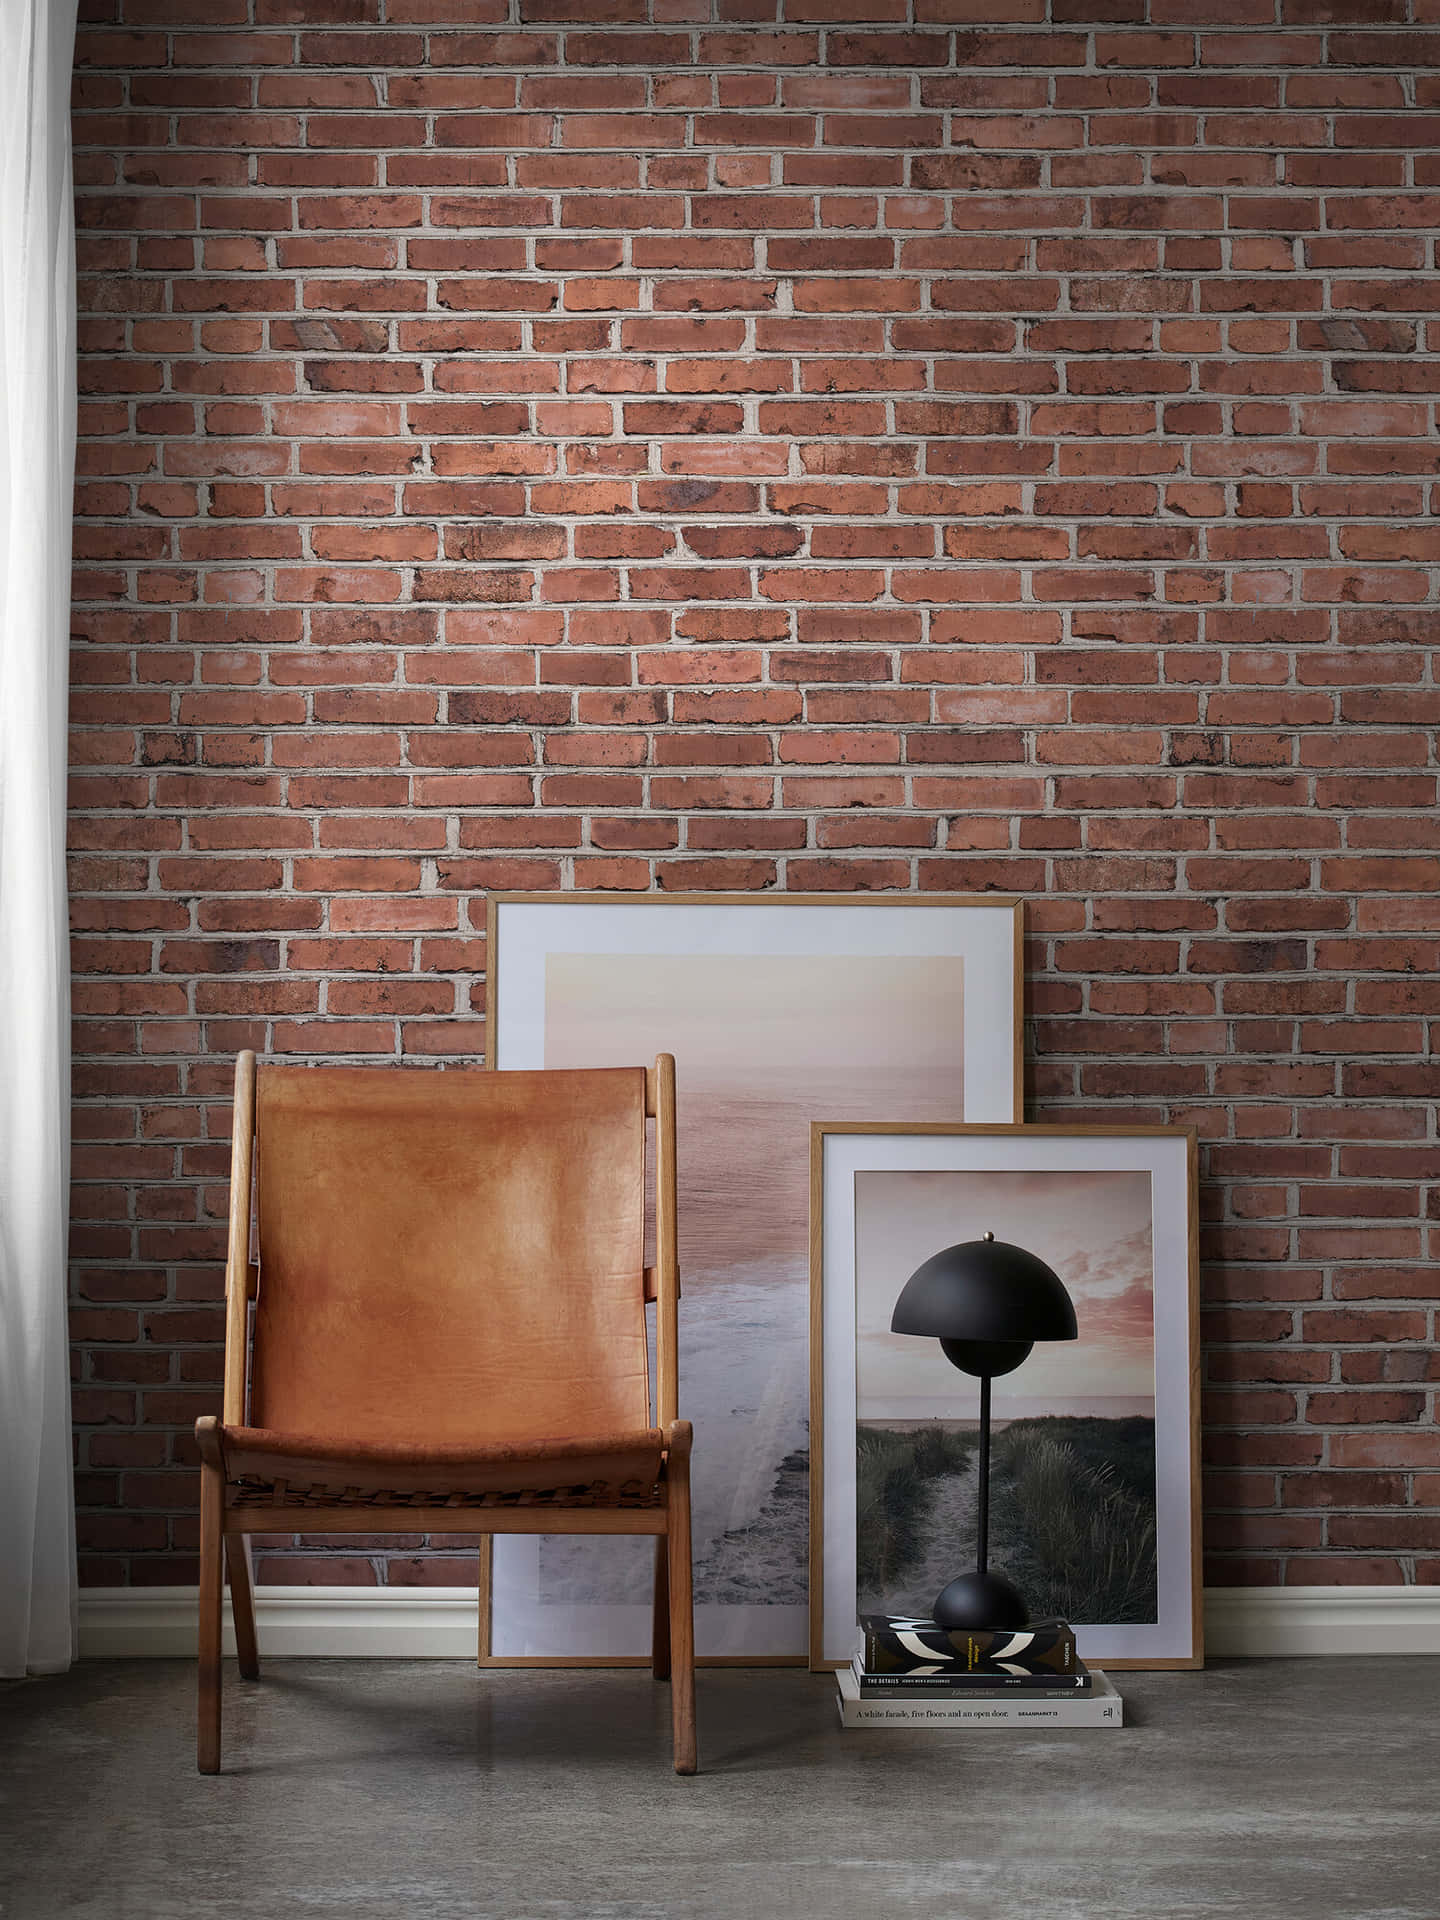 Classic Brown Brick Wall Wallpaper